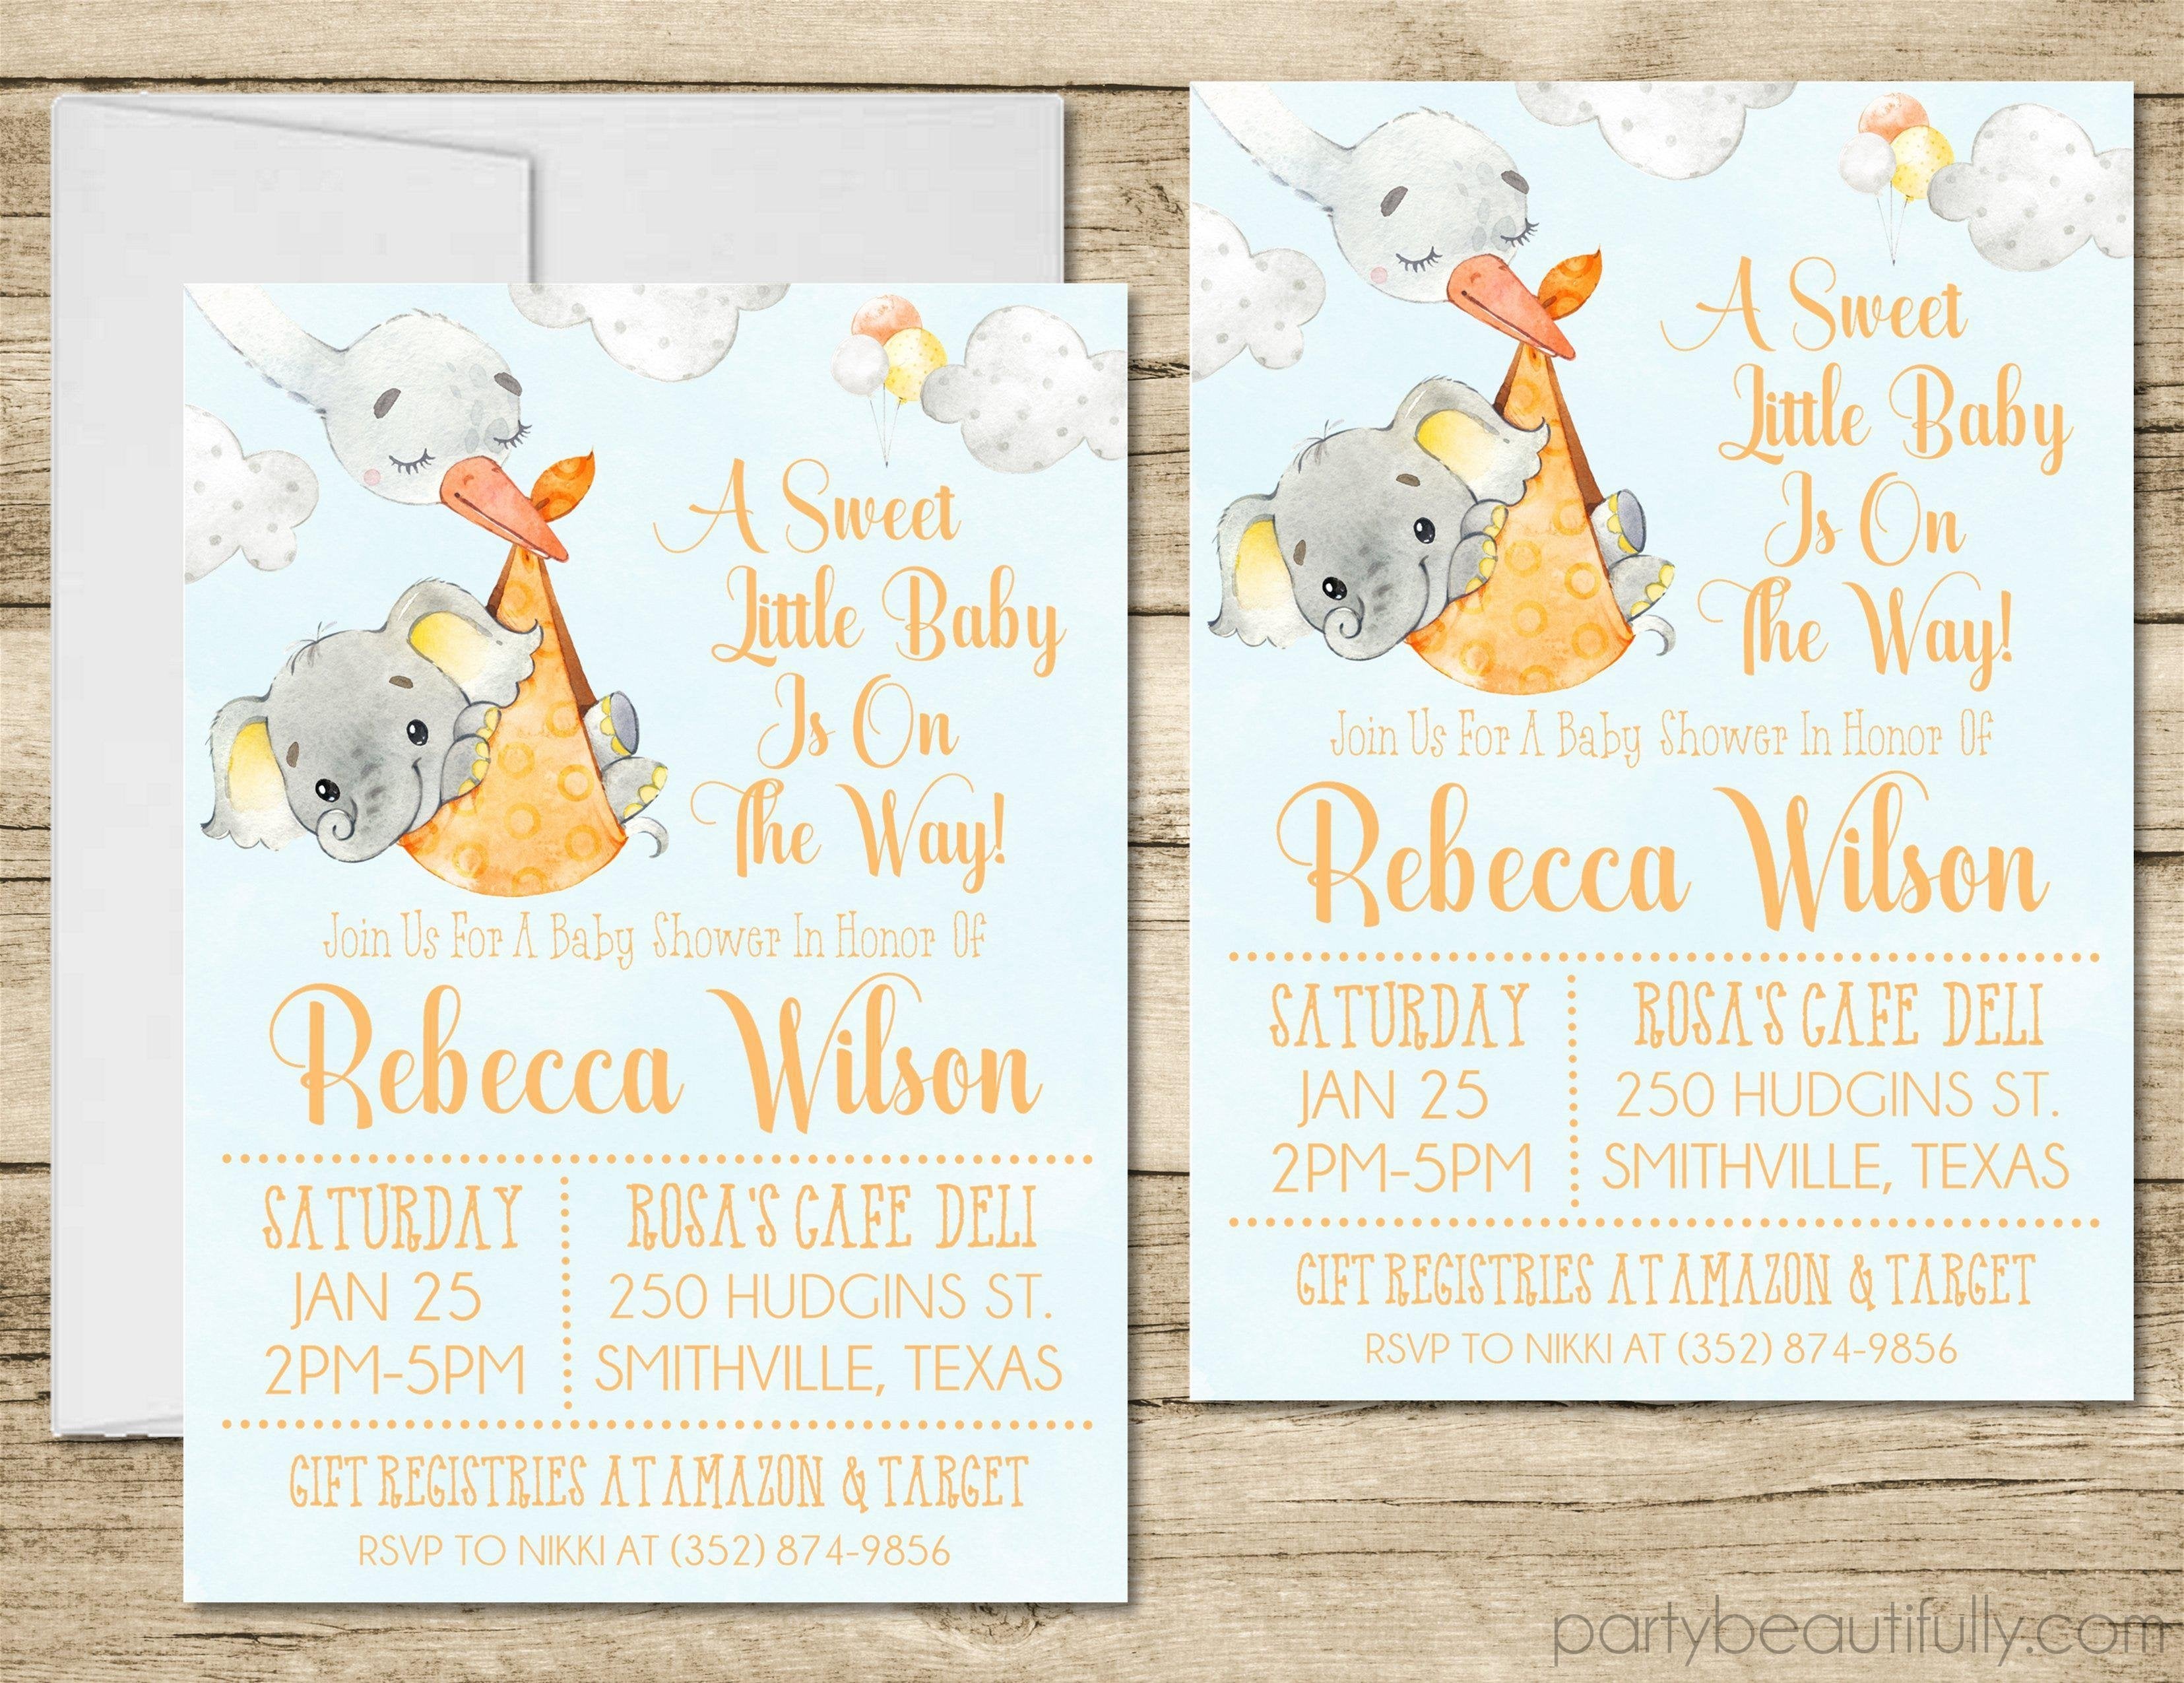 neutral elephant baby shower invitations